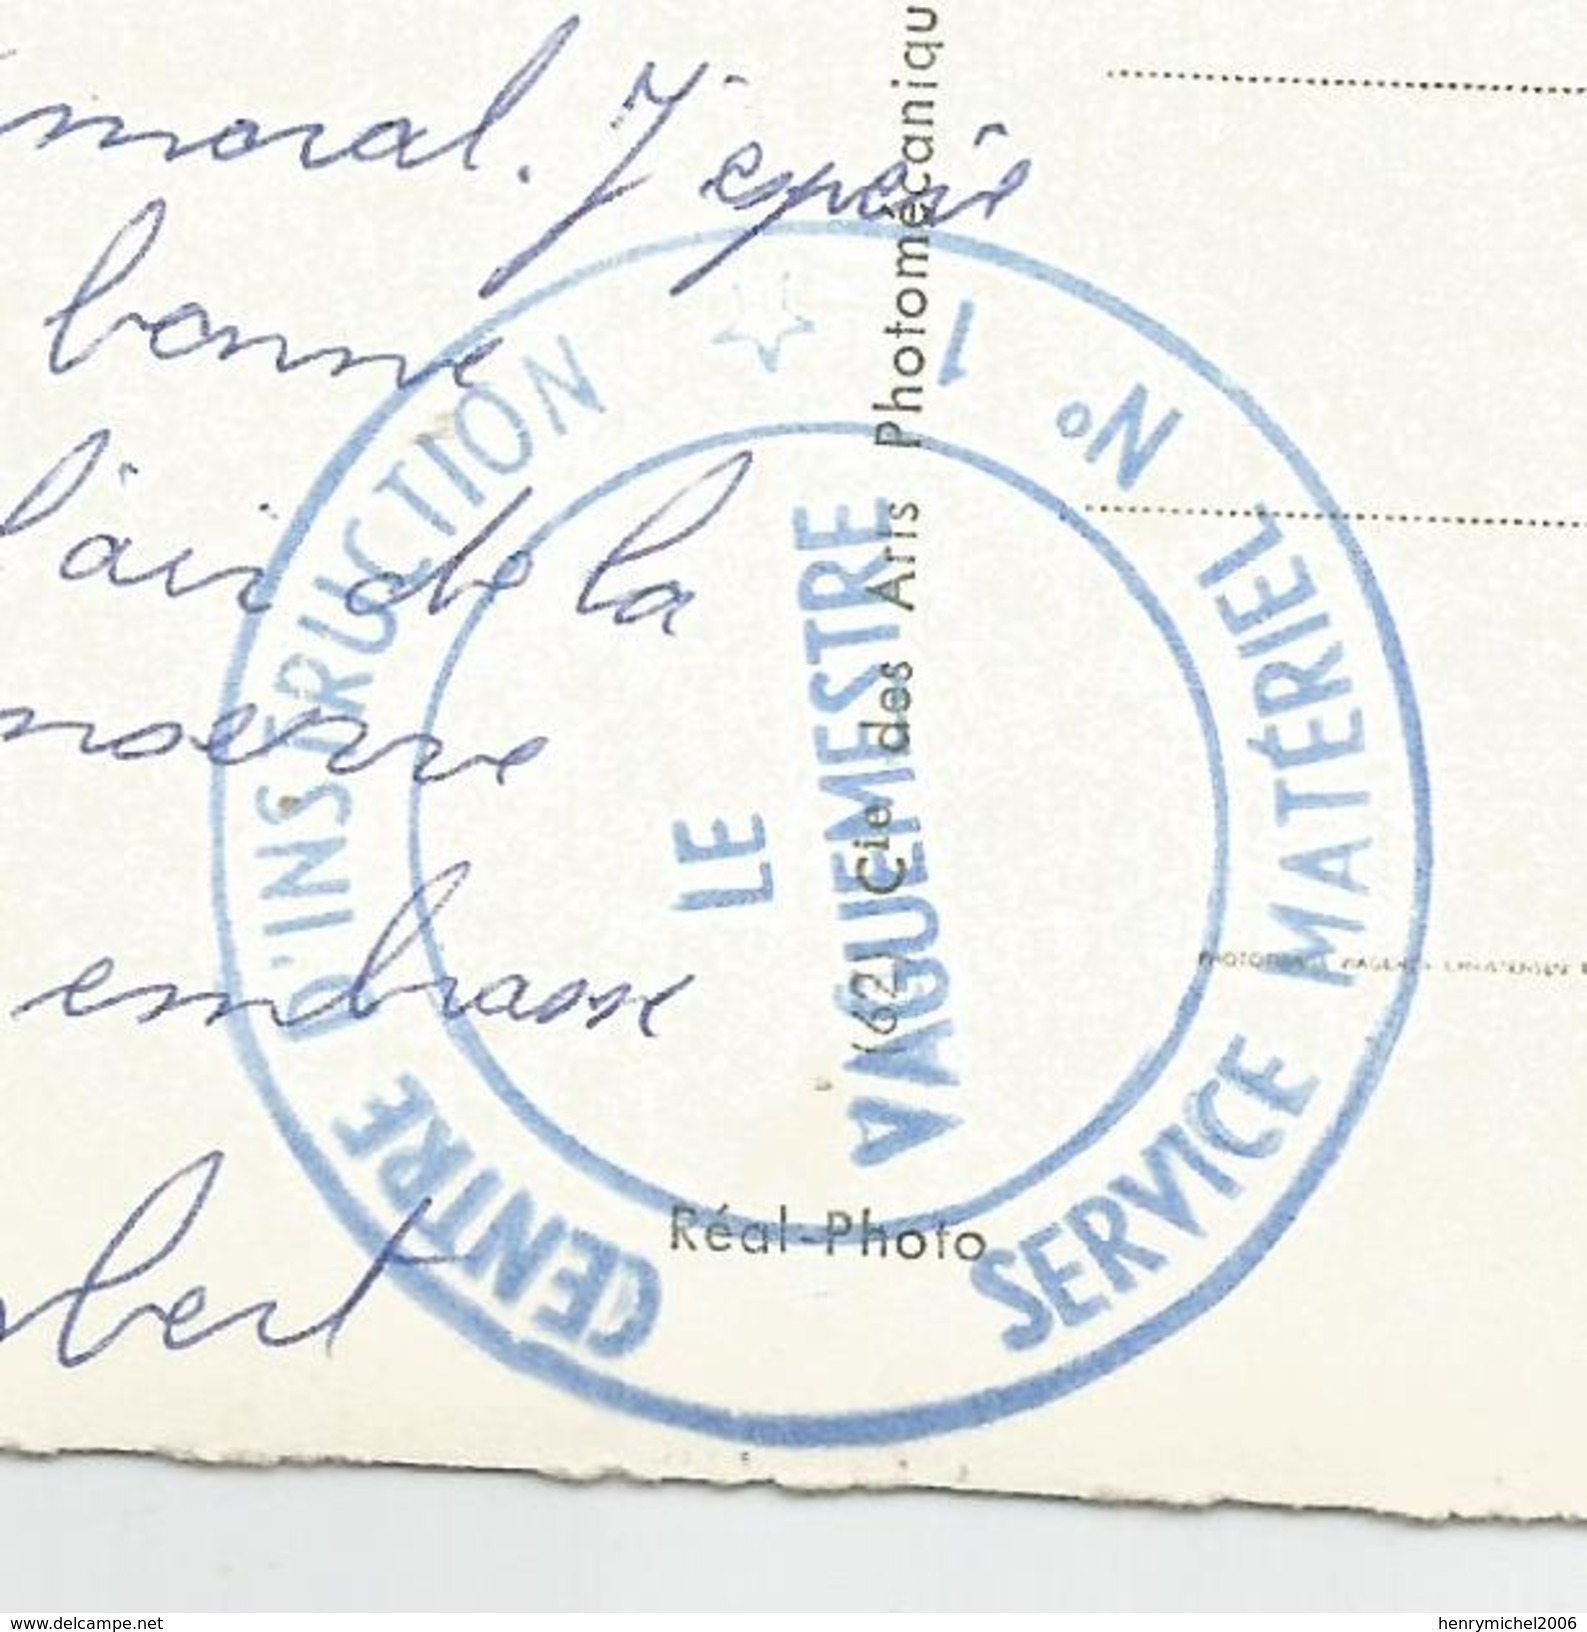 Marcophilie - Allier - 03 - Montluçon Cachet Militaire Centre D'instruction N1 Service Matériel N1 Timbre Fm 1963 - Military Postmarks From 1900 (out Of Wars Periods)